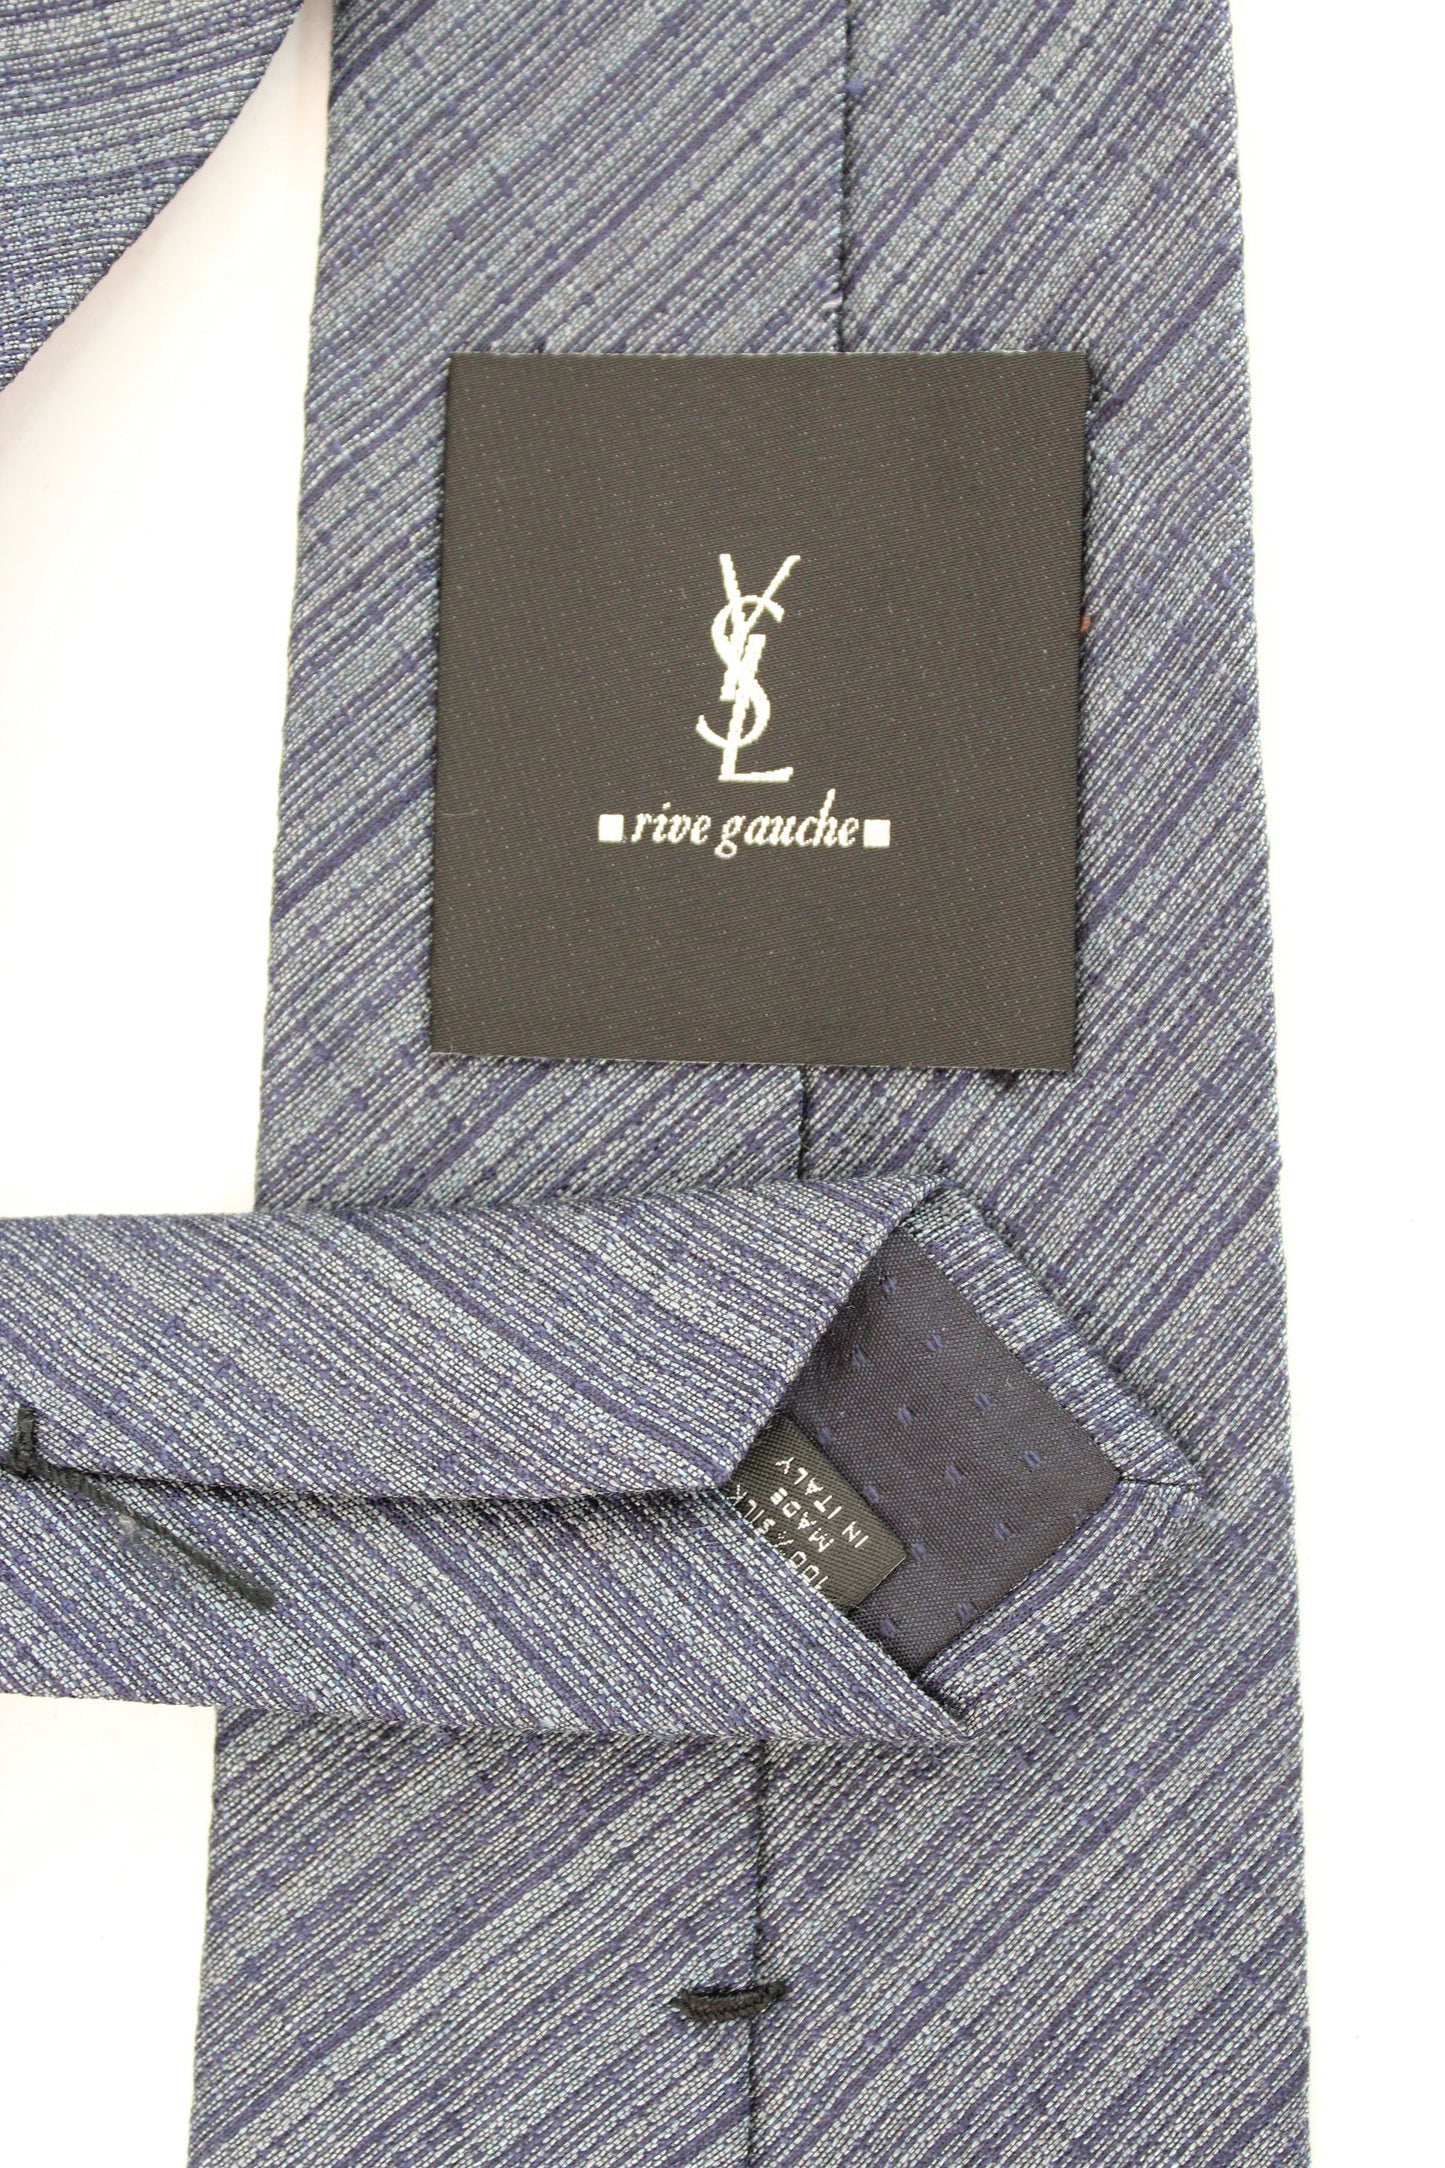 Yves Saint Laurent Blue Gray Silk Vintage Tie